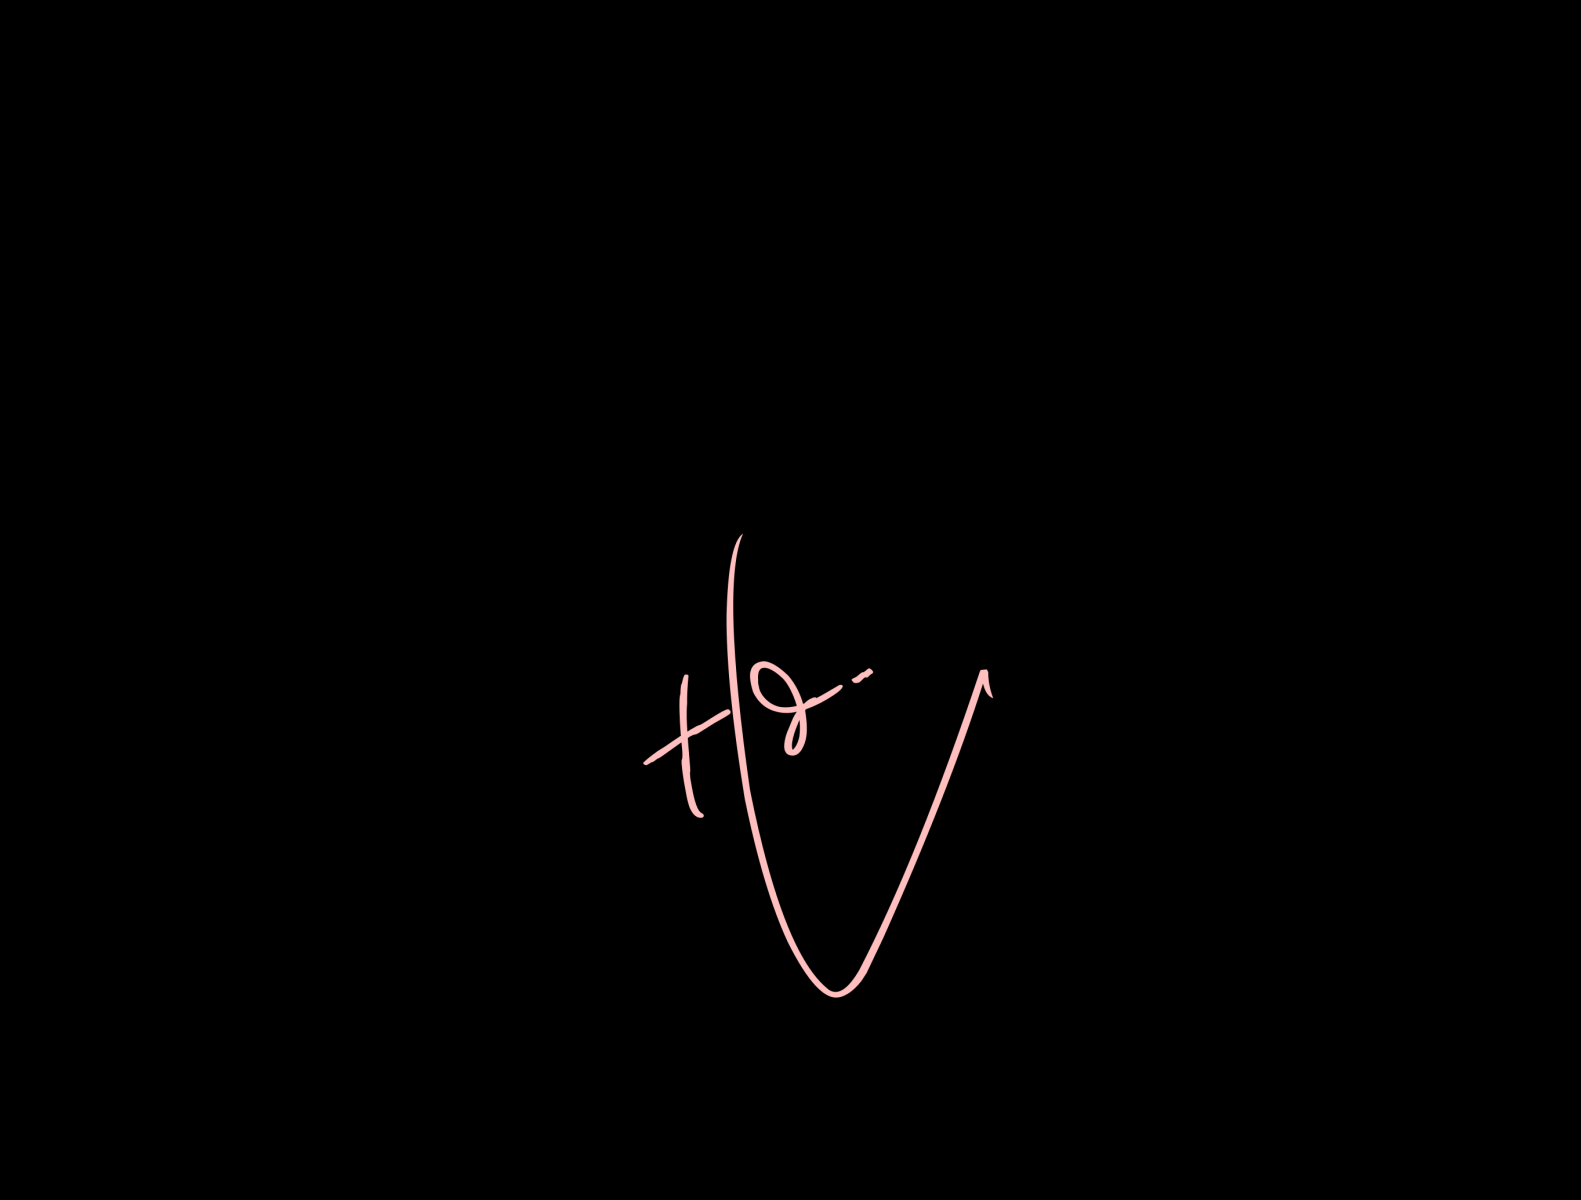 HD Handwriting Logo Design by Dipta Aditya on Dribbble